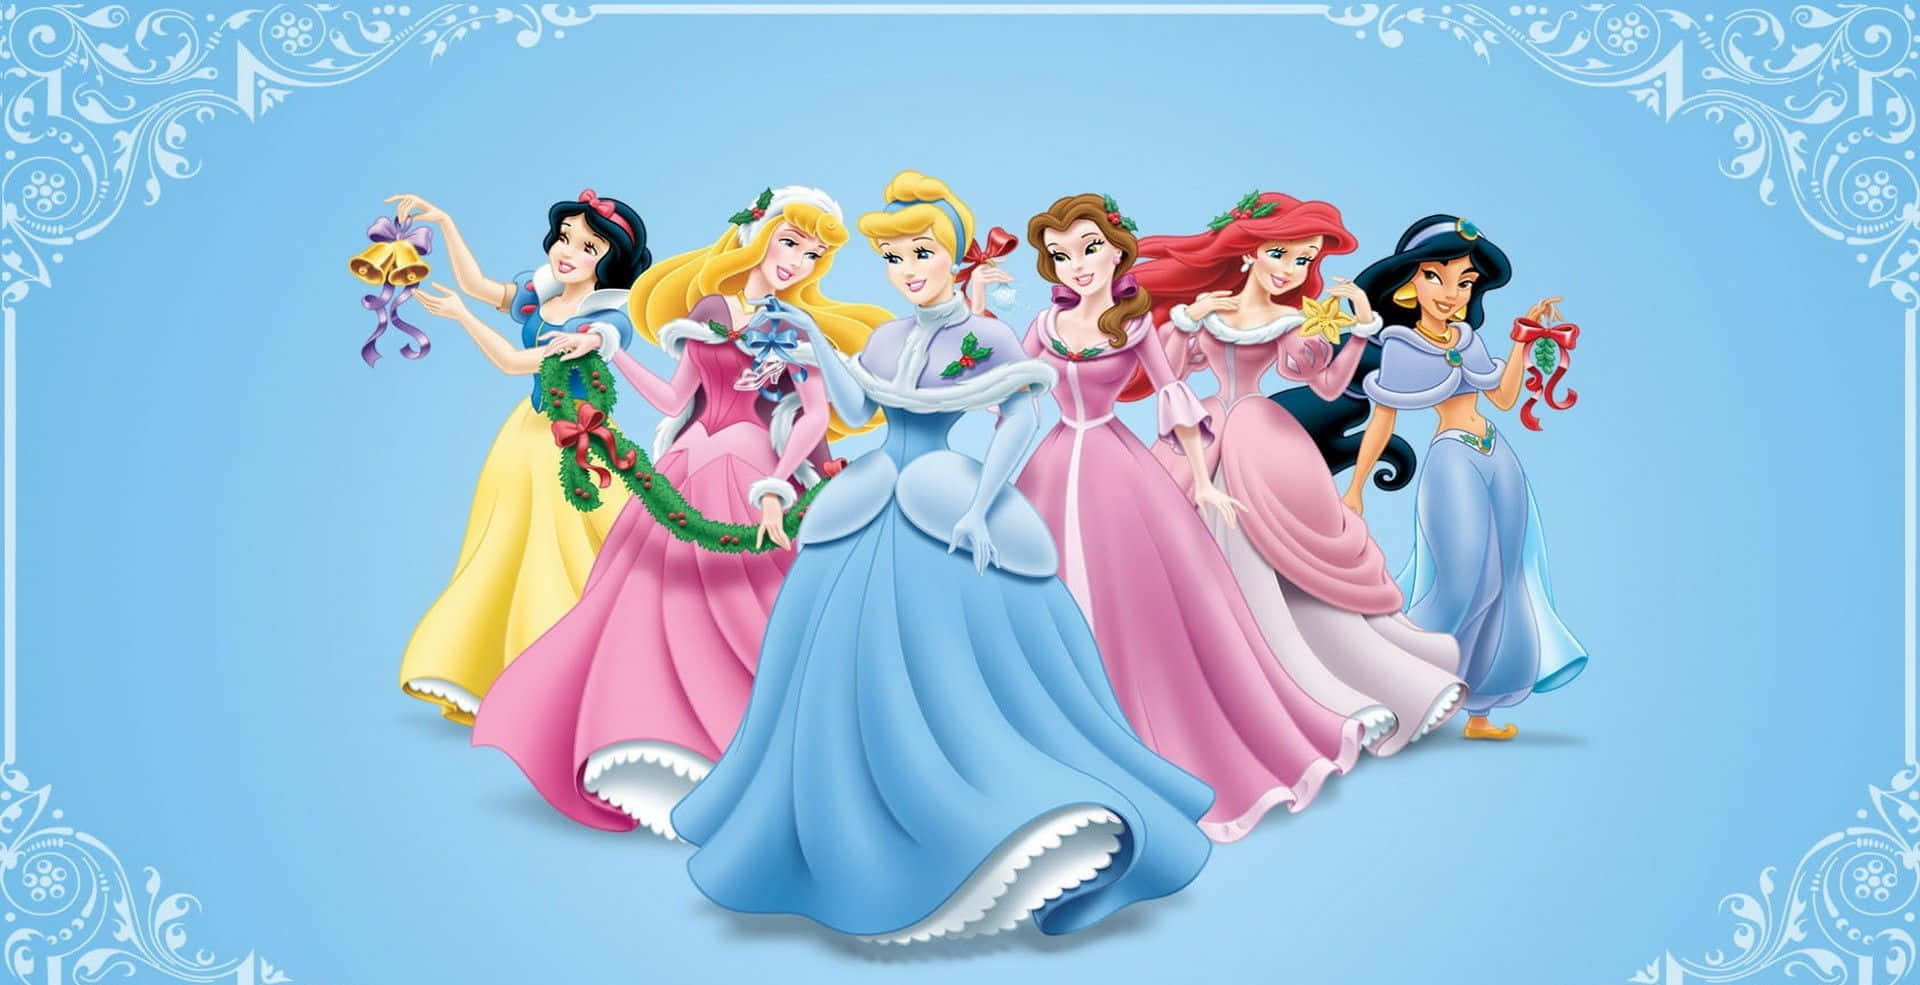 Download Disney Princesses Pictures | Wallpapers.com